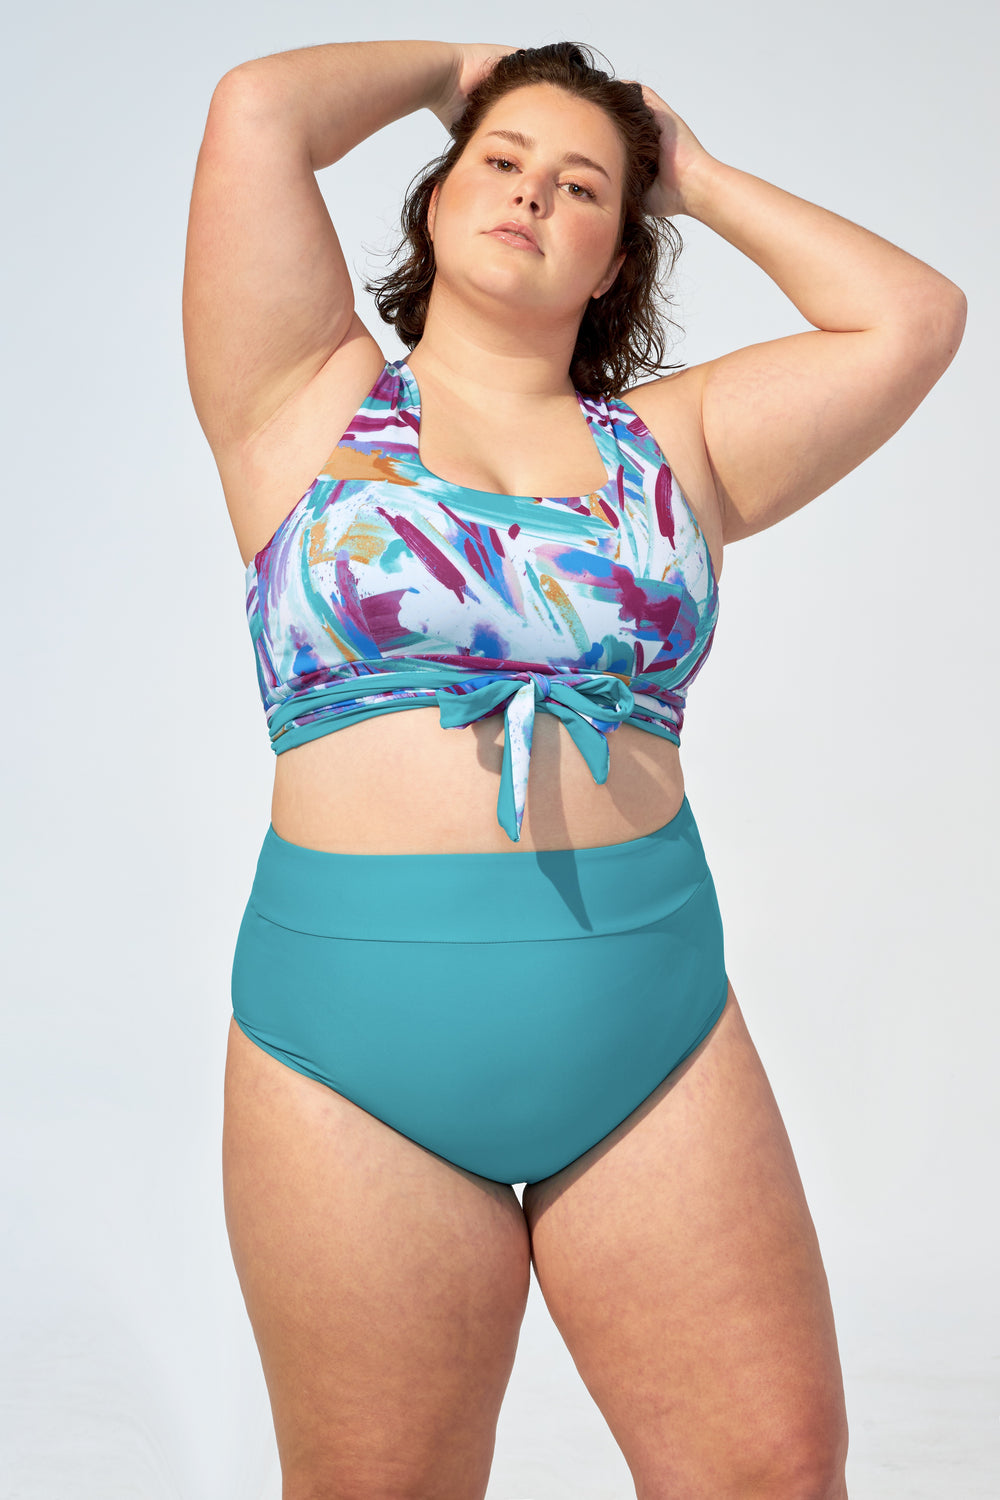 BESTPSR Swimsuit for Women's Sexy Sport Bras and Swim Bottom Two Piece Set  Bikinis Seaside Beach Bathing Suit 